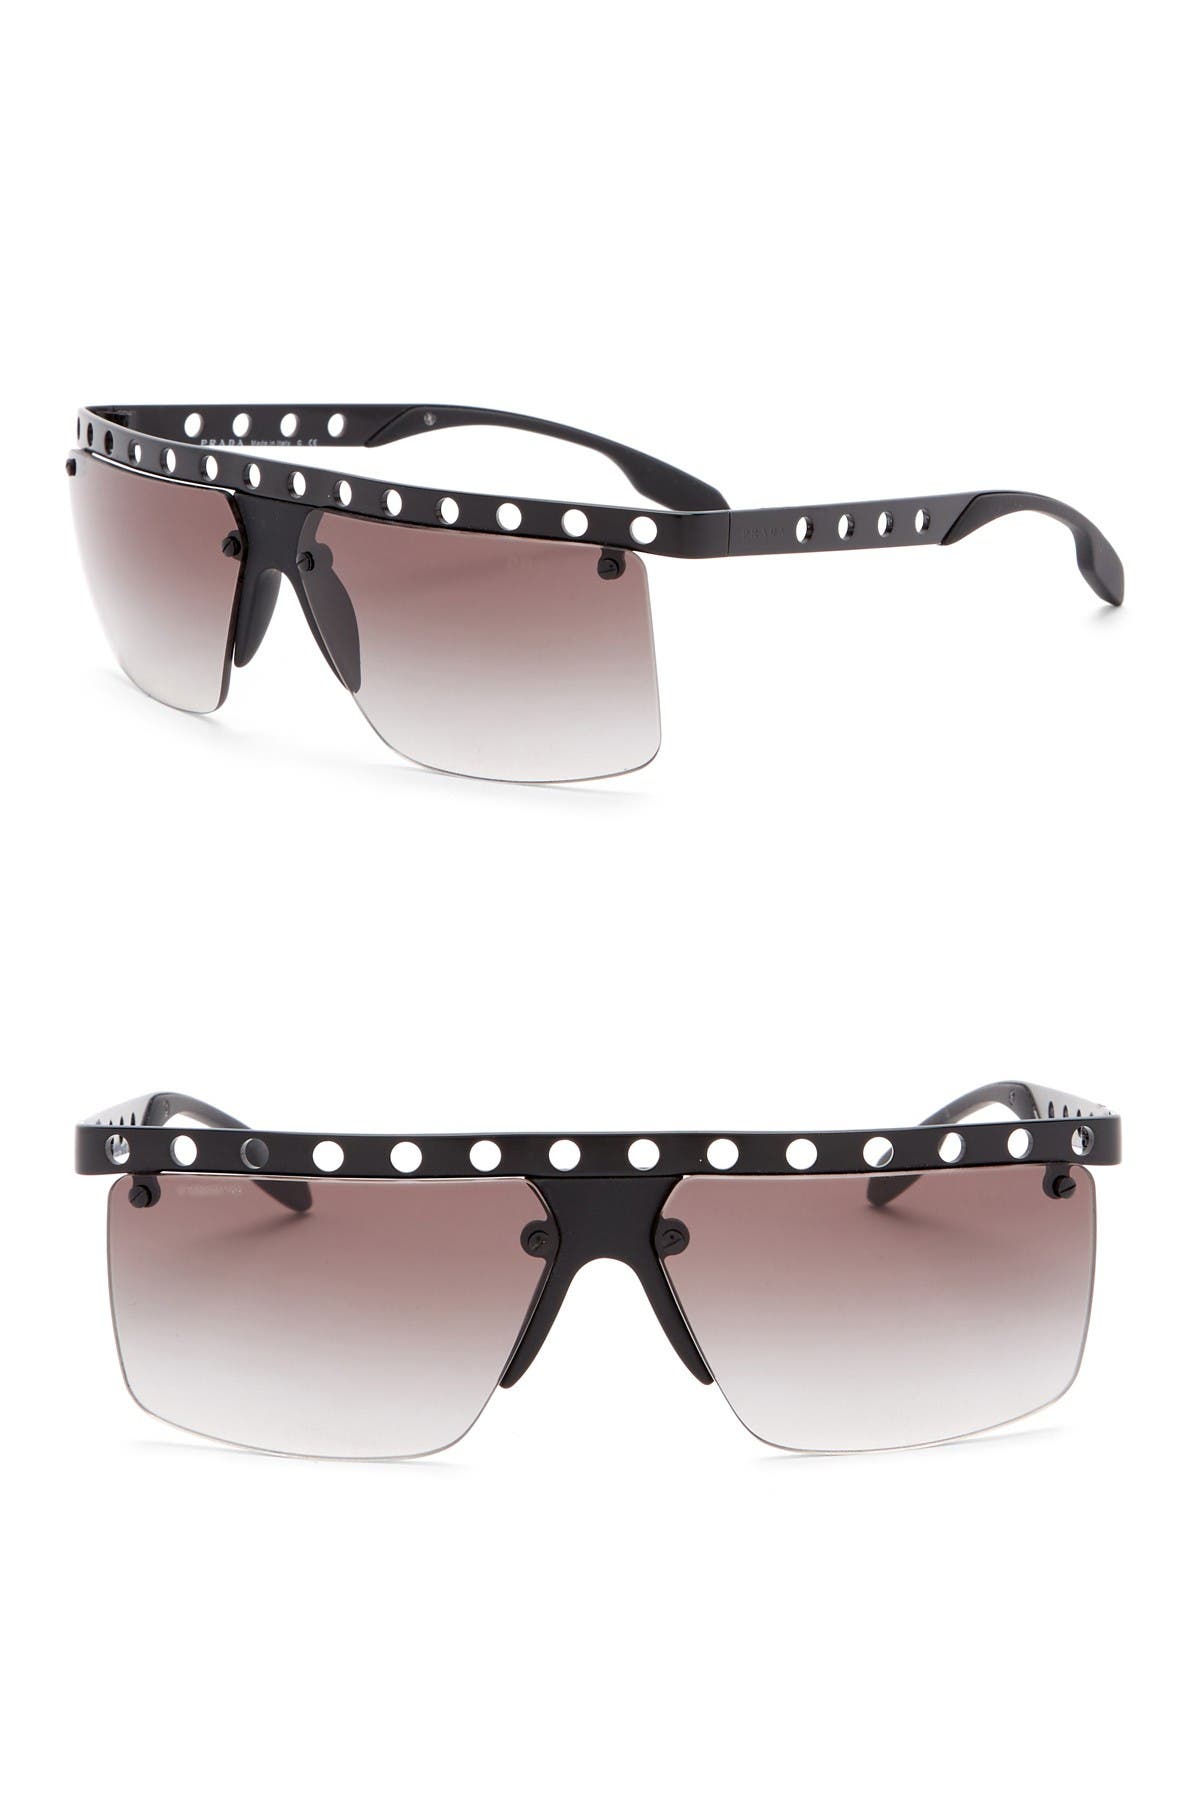 Prada | 62mm Flat Top Sunglasses 